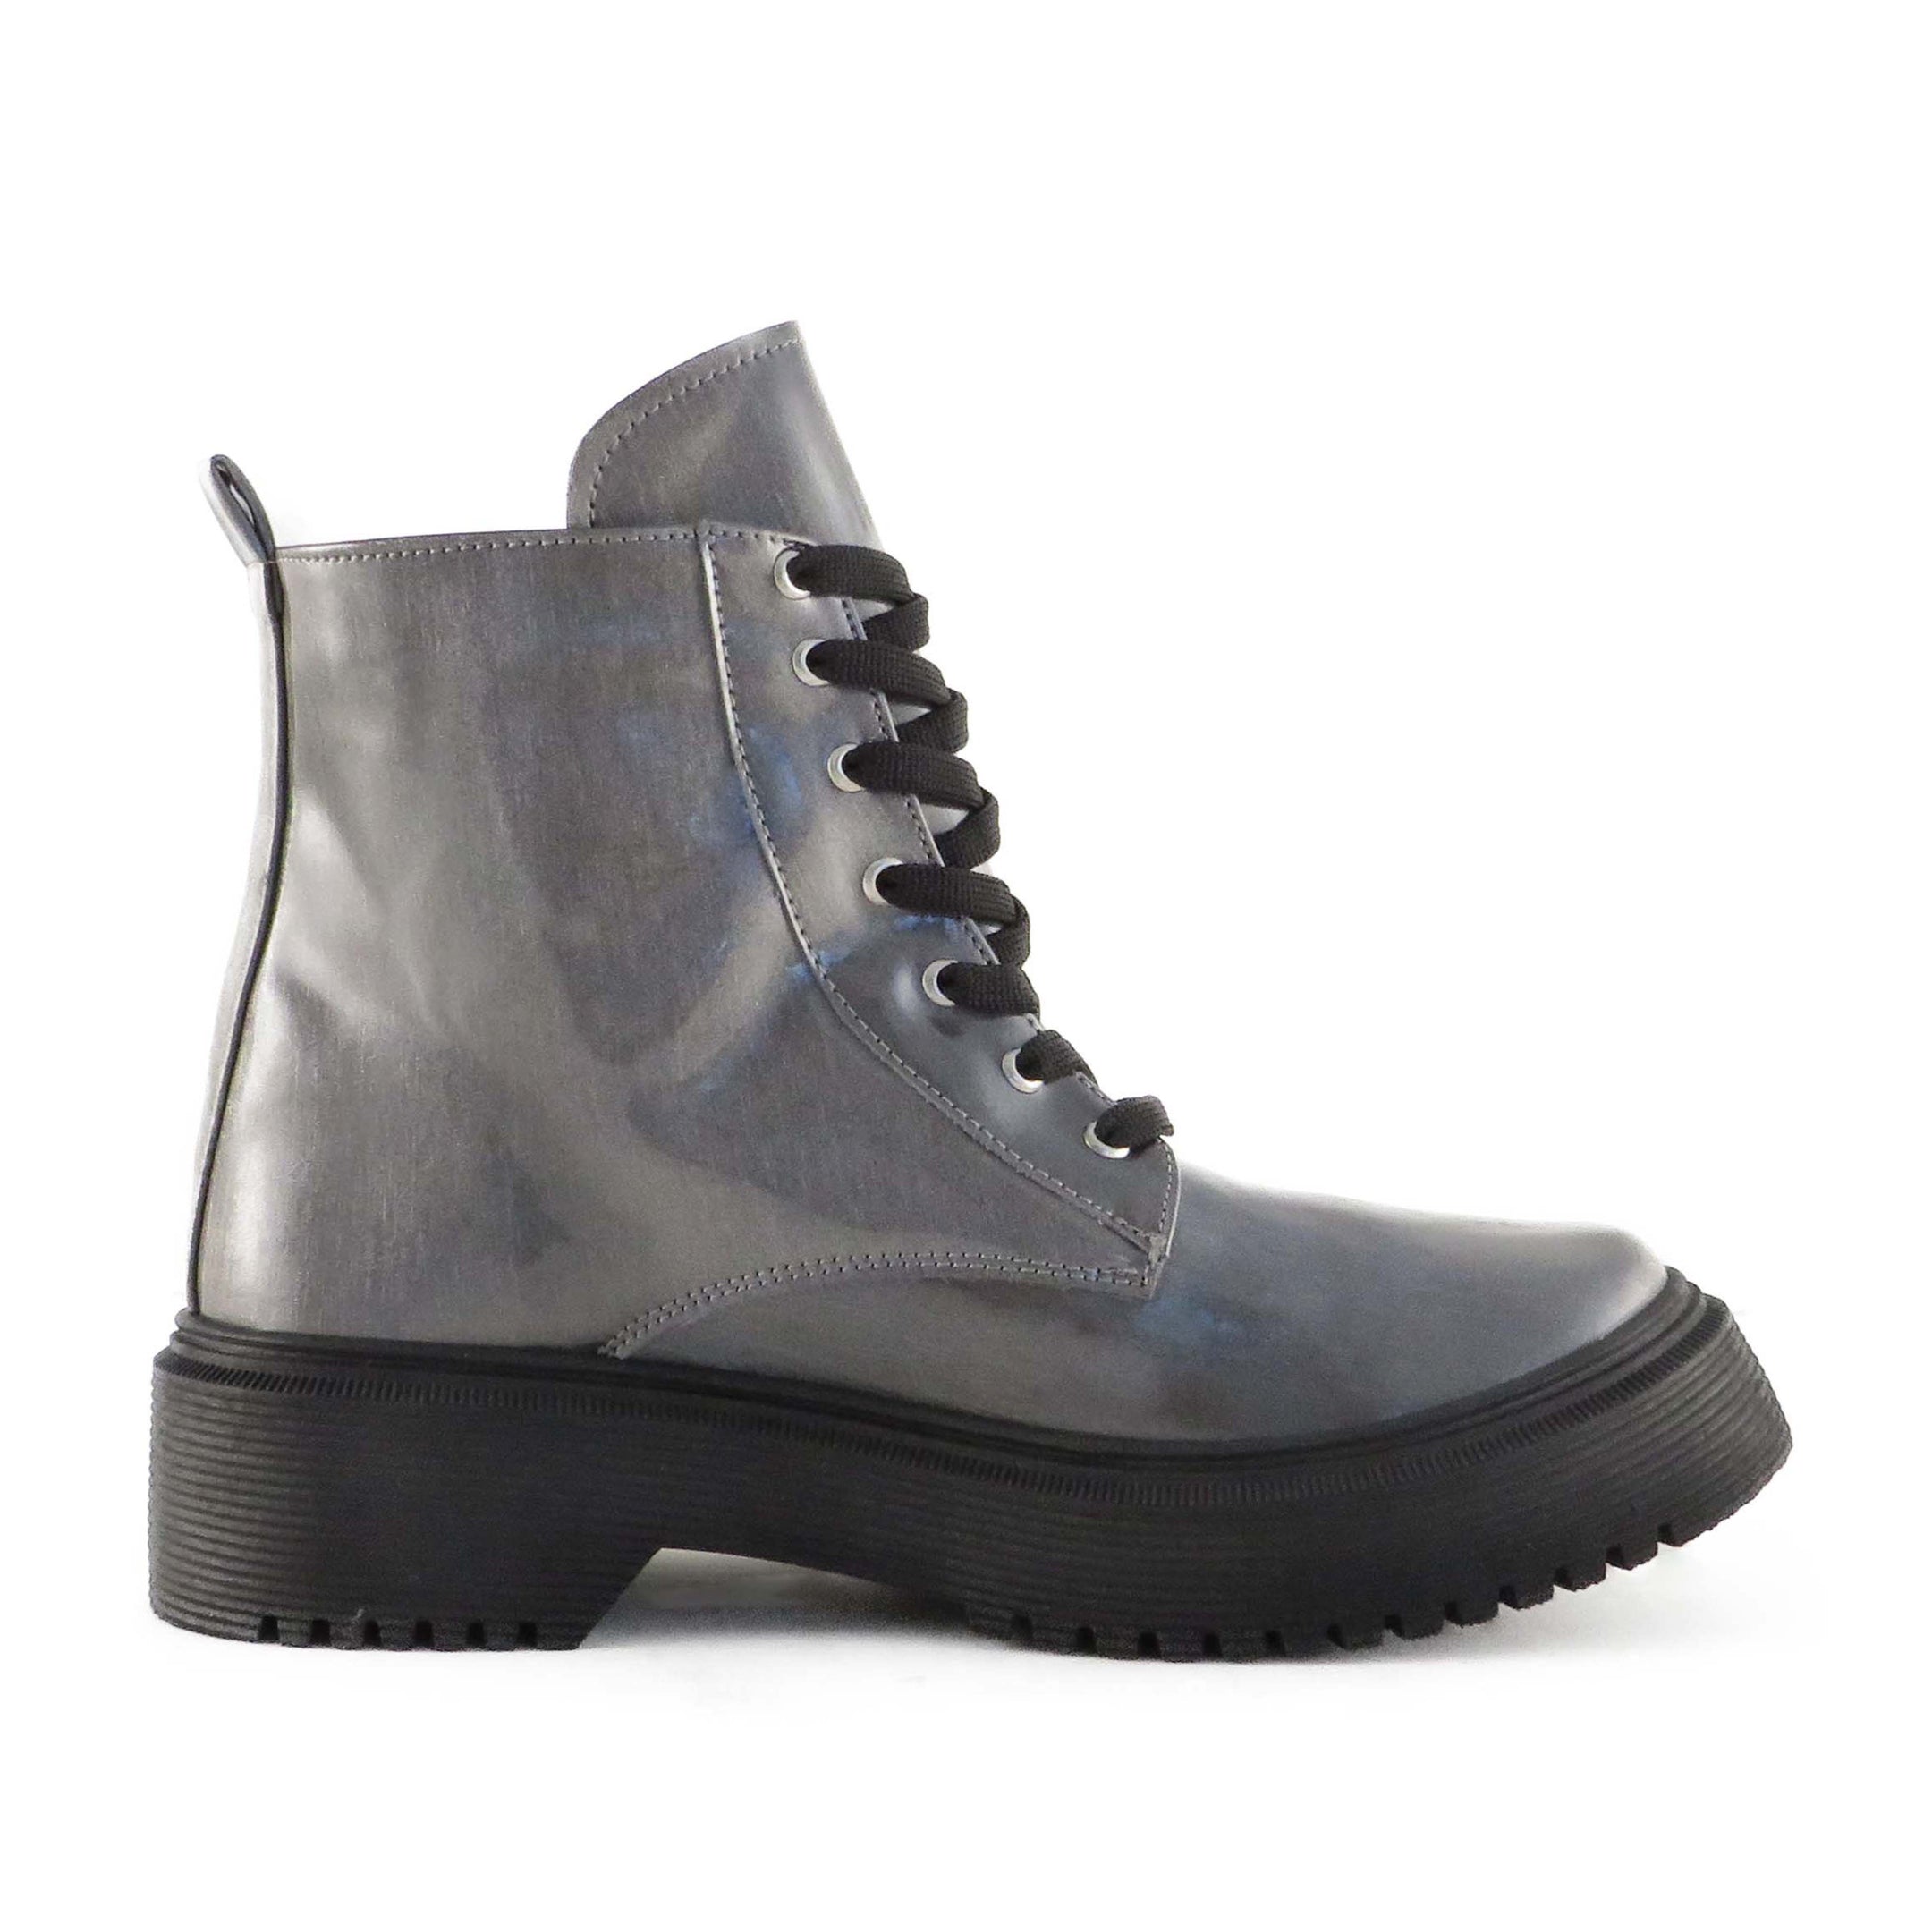 Buy Women's Lunar Combat Boots Monochromatic Silver by Nest Shoes